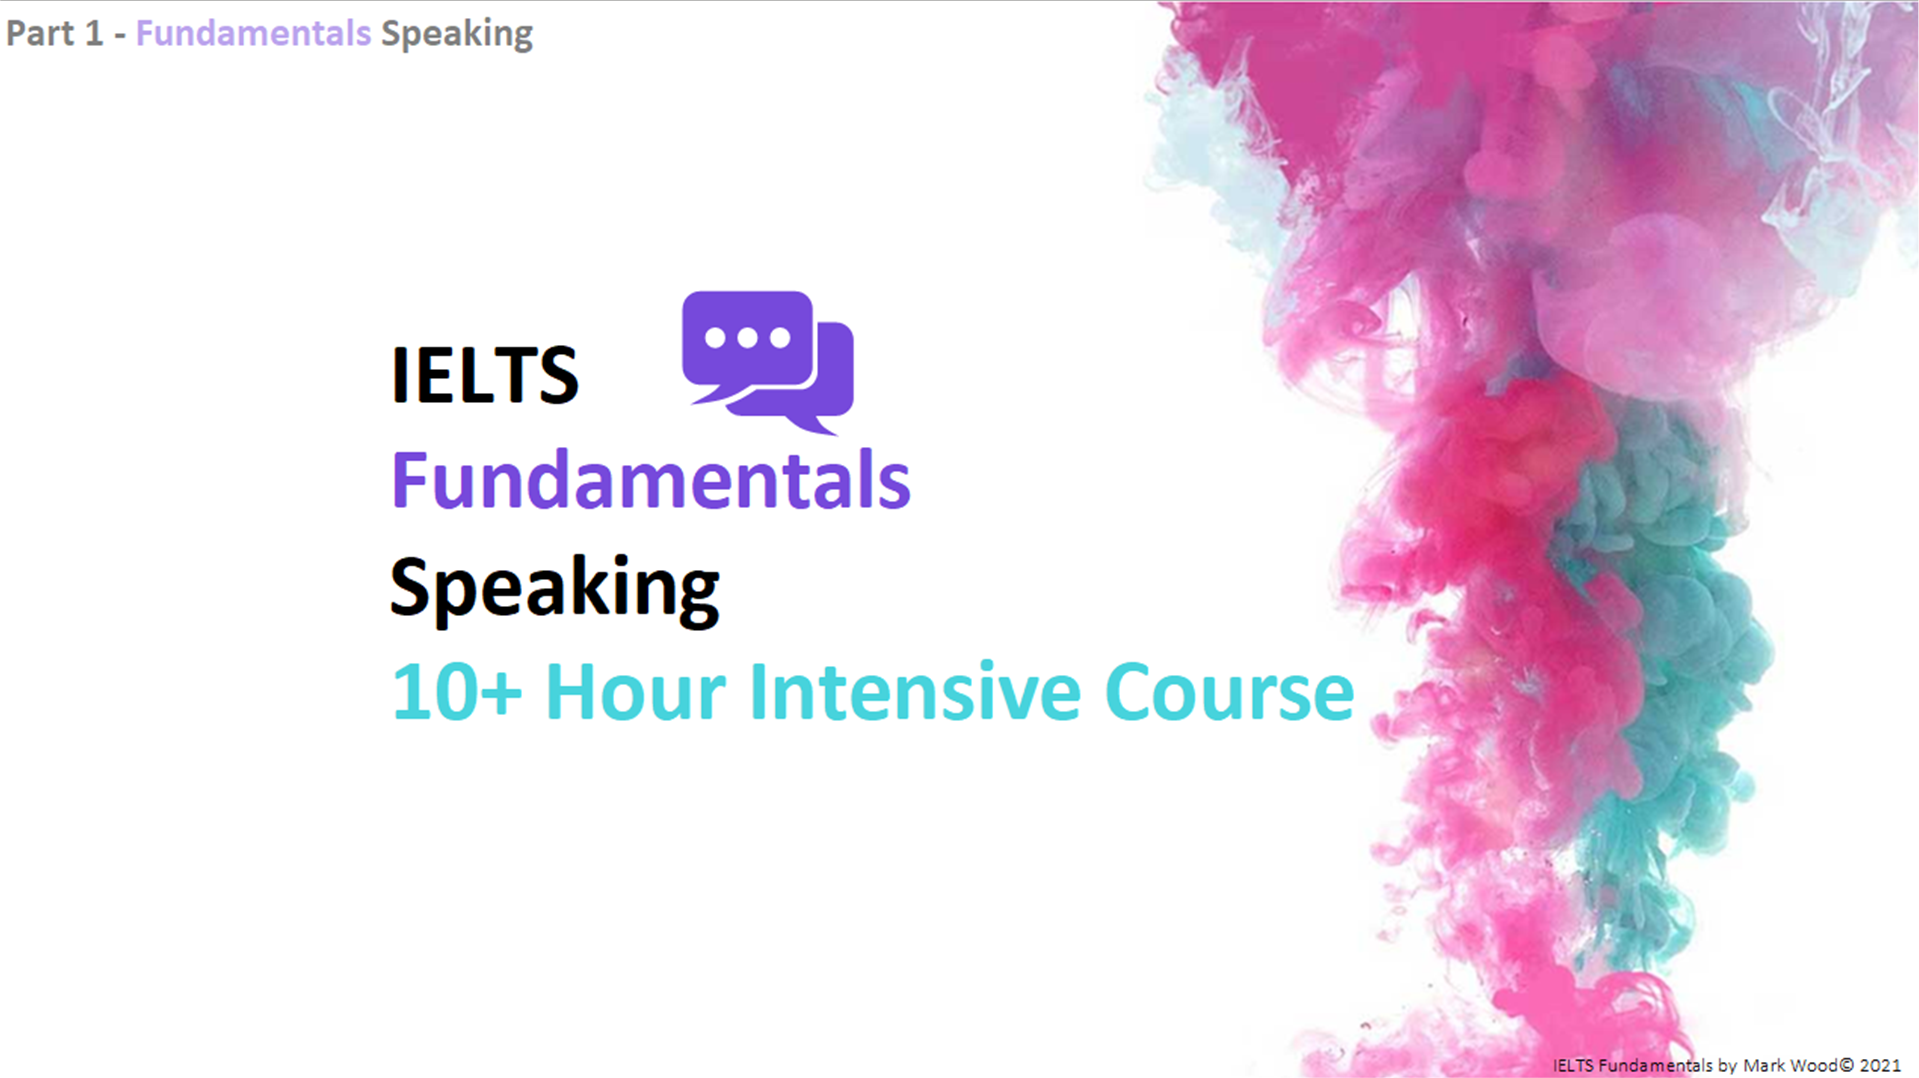 IELTS Speaking Fundamentals Course